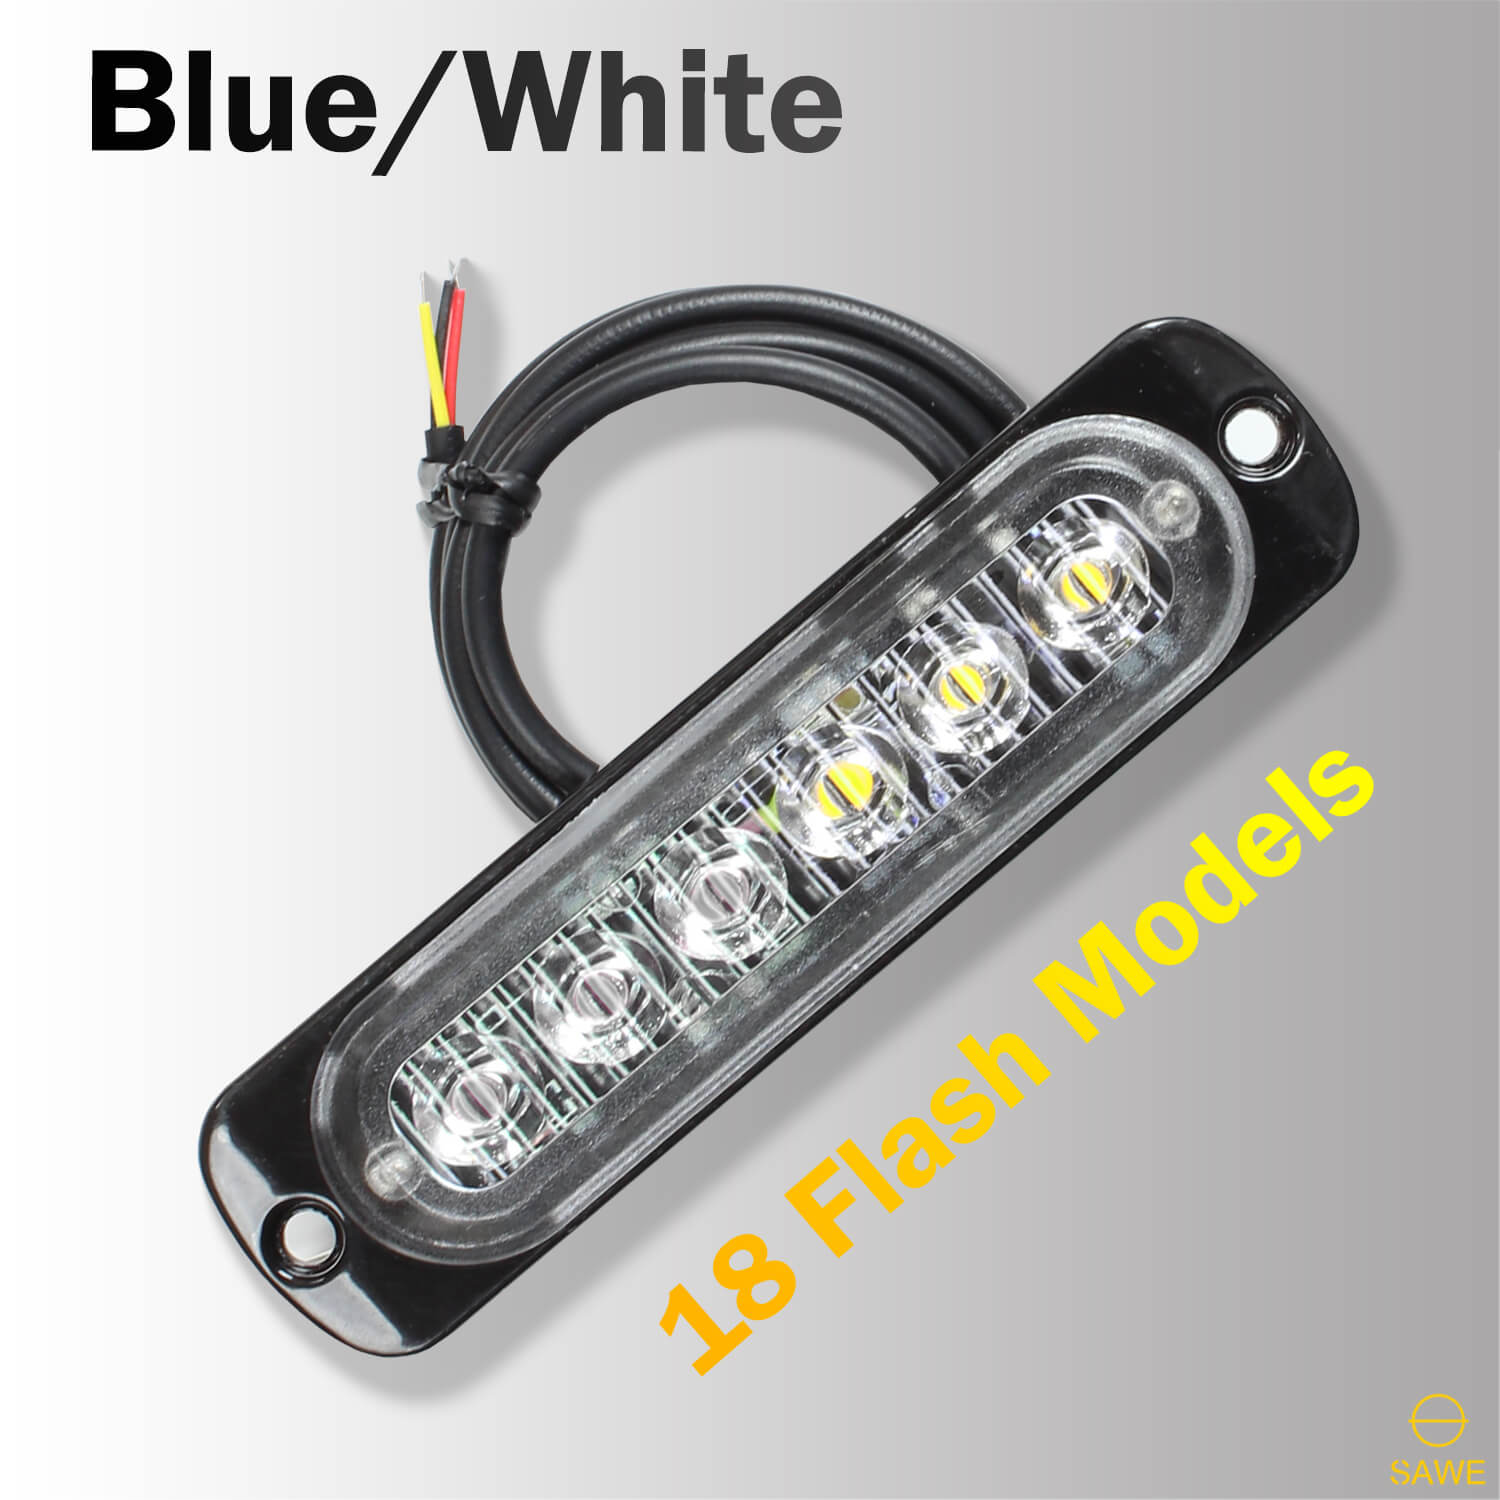 Emergency LED Strobe Lights Bar for Offroad Car Truck Warning Hazard Flash Grille and Surface Mount Light - Blue / White 6-LED